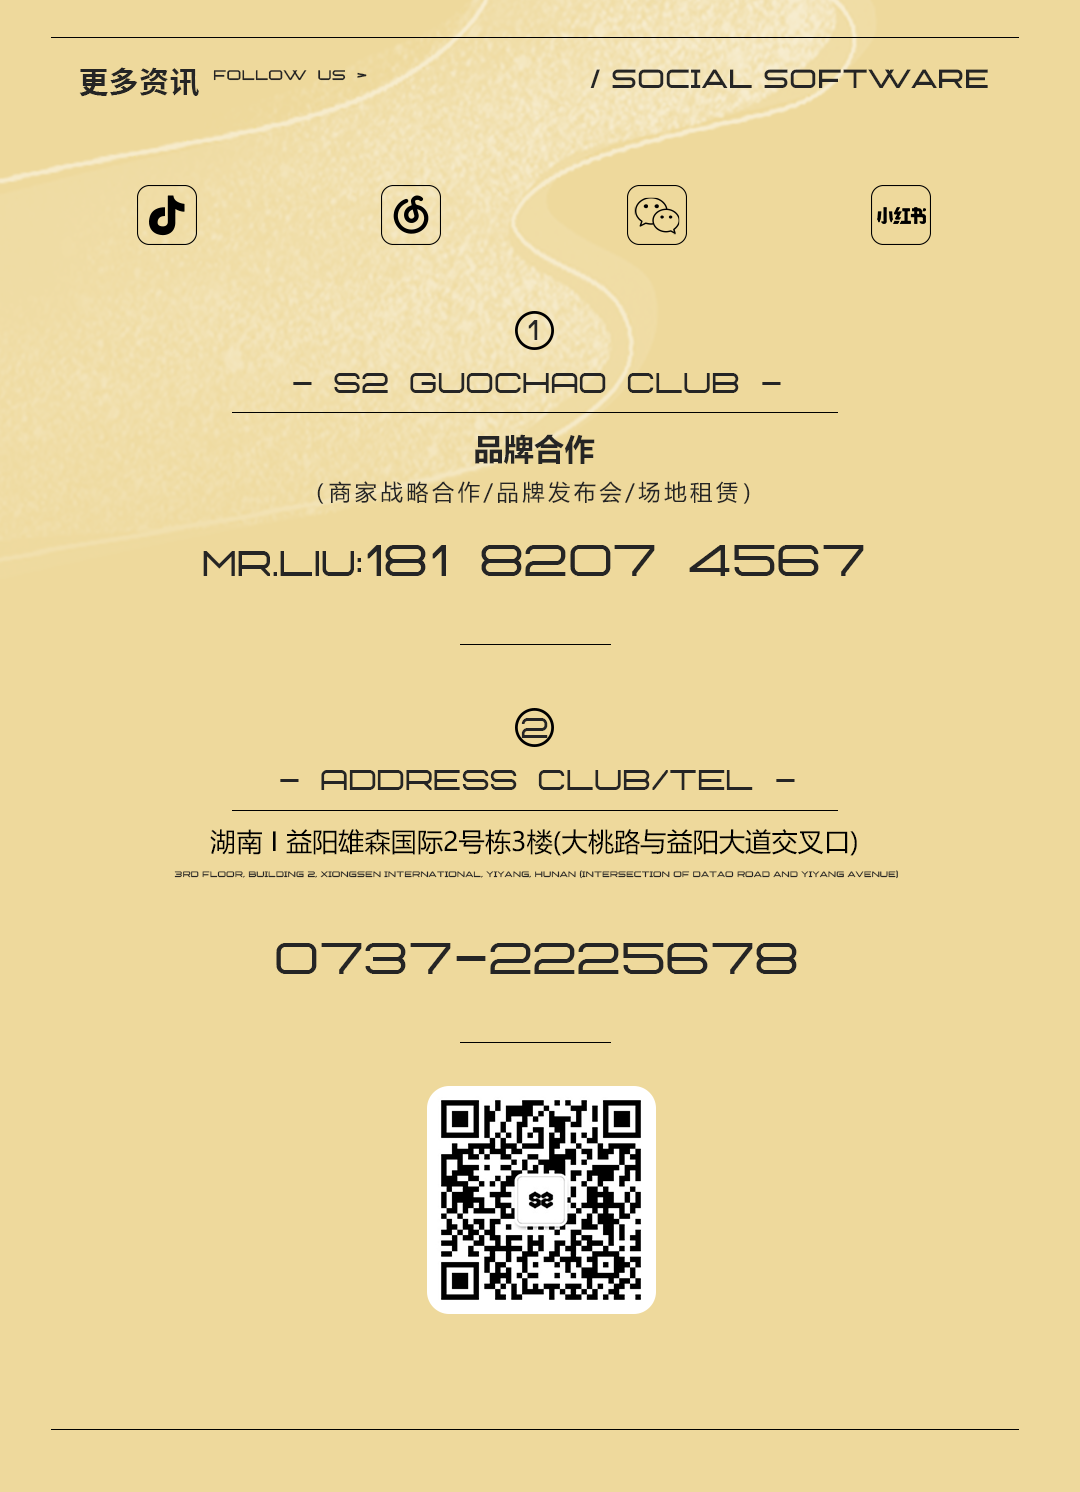 S2 GUOCHAO CLUB丨让快乐触手可及-益阳S2酒吧/S2国潮俱乐部